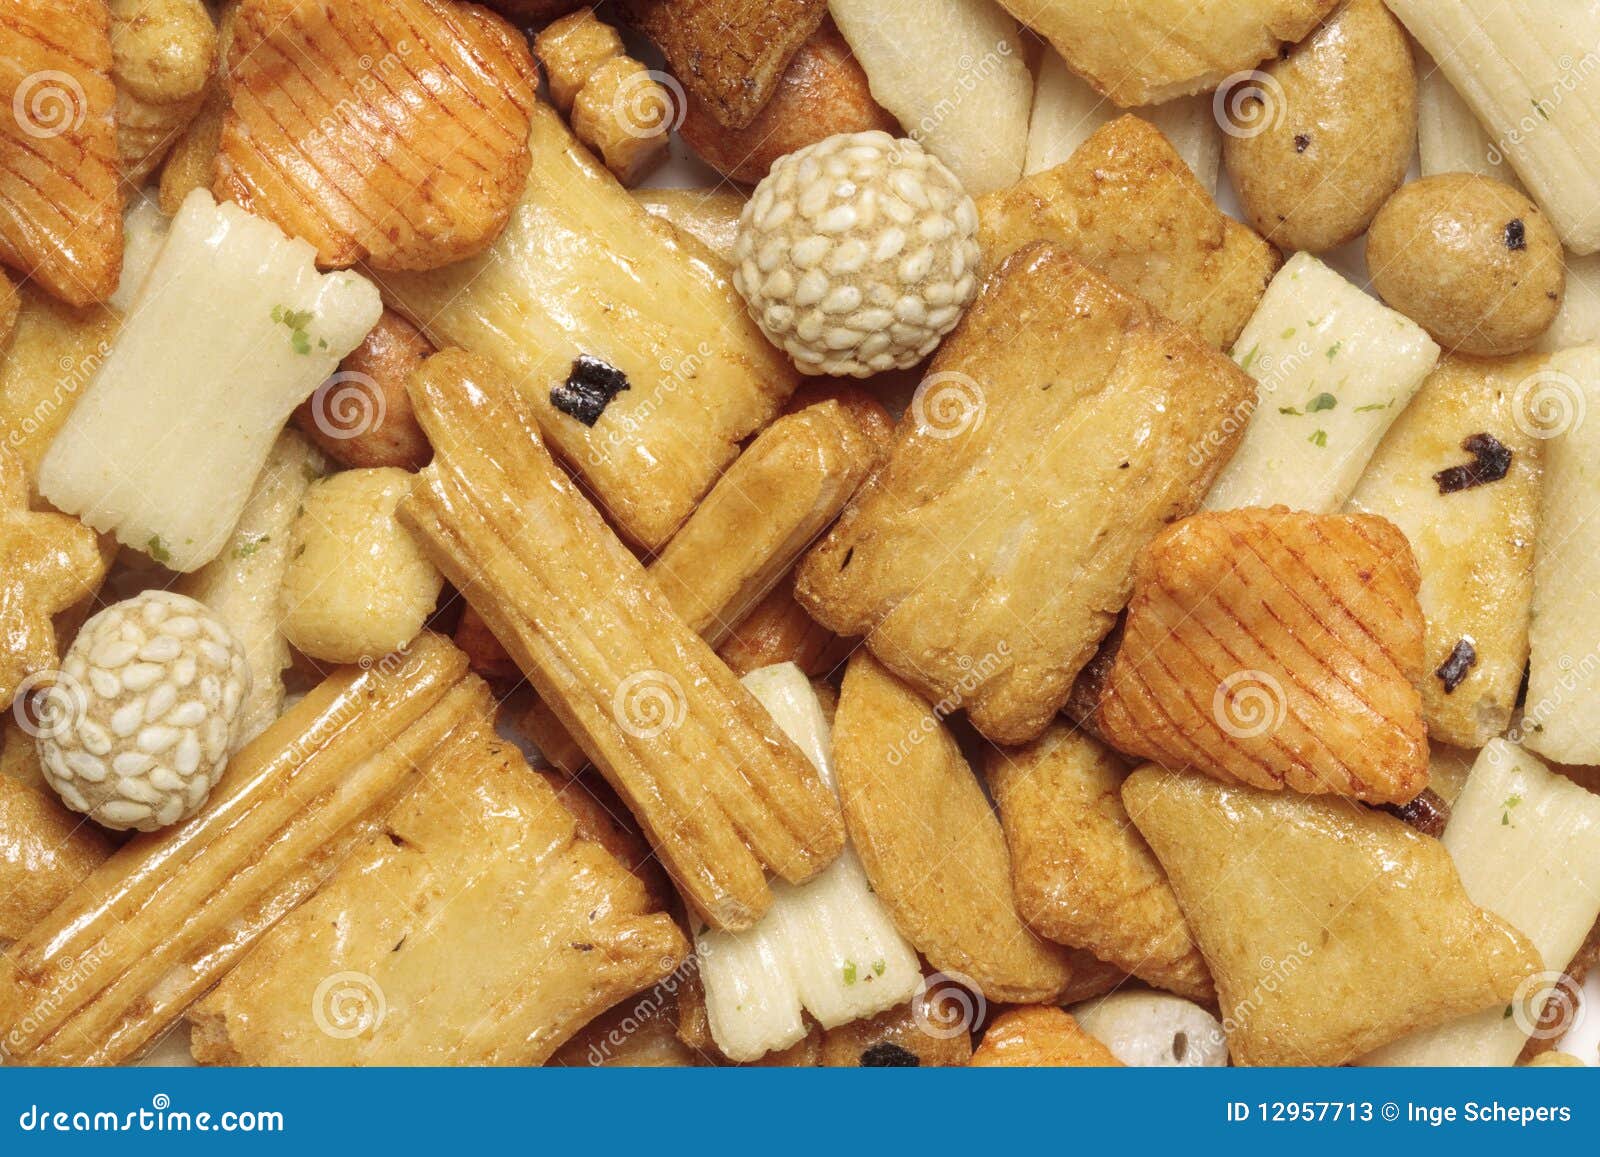 Japanese Roasted Nuts Mix stock image. of 12957713